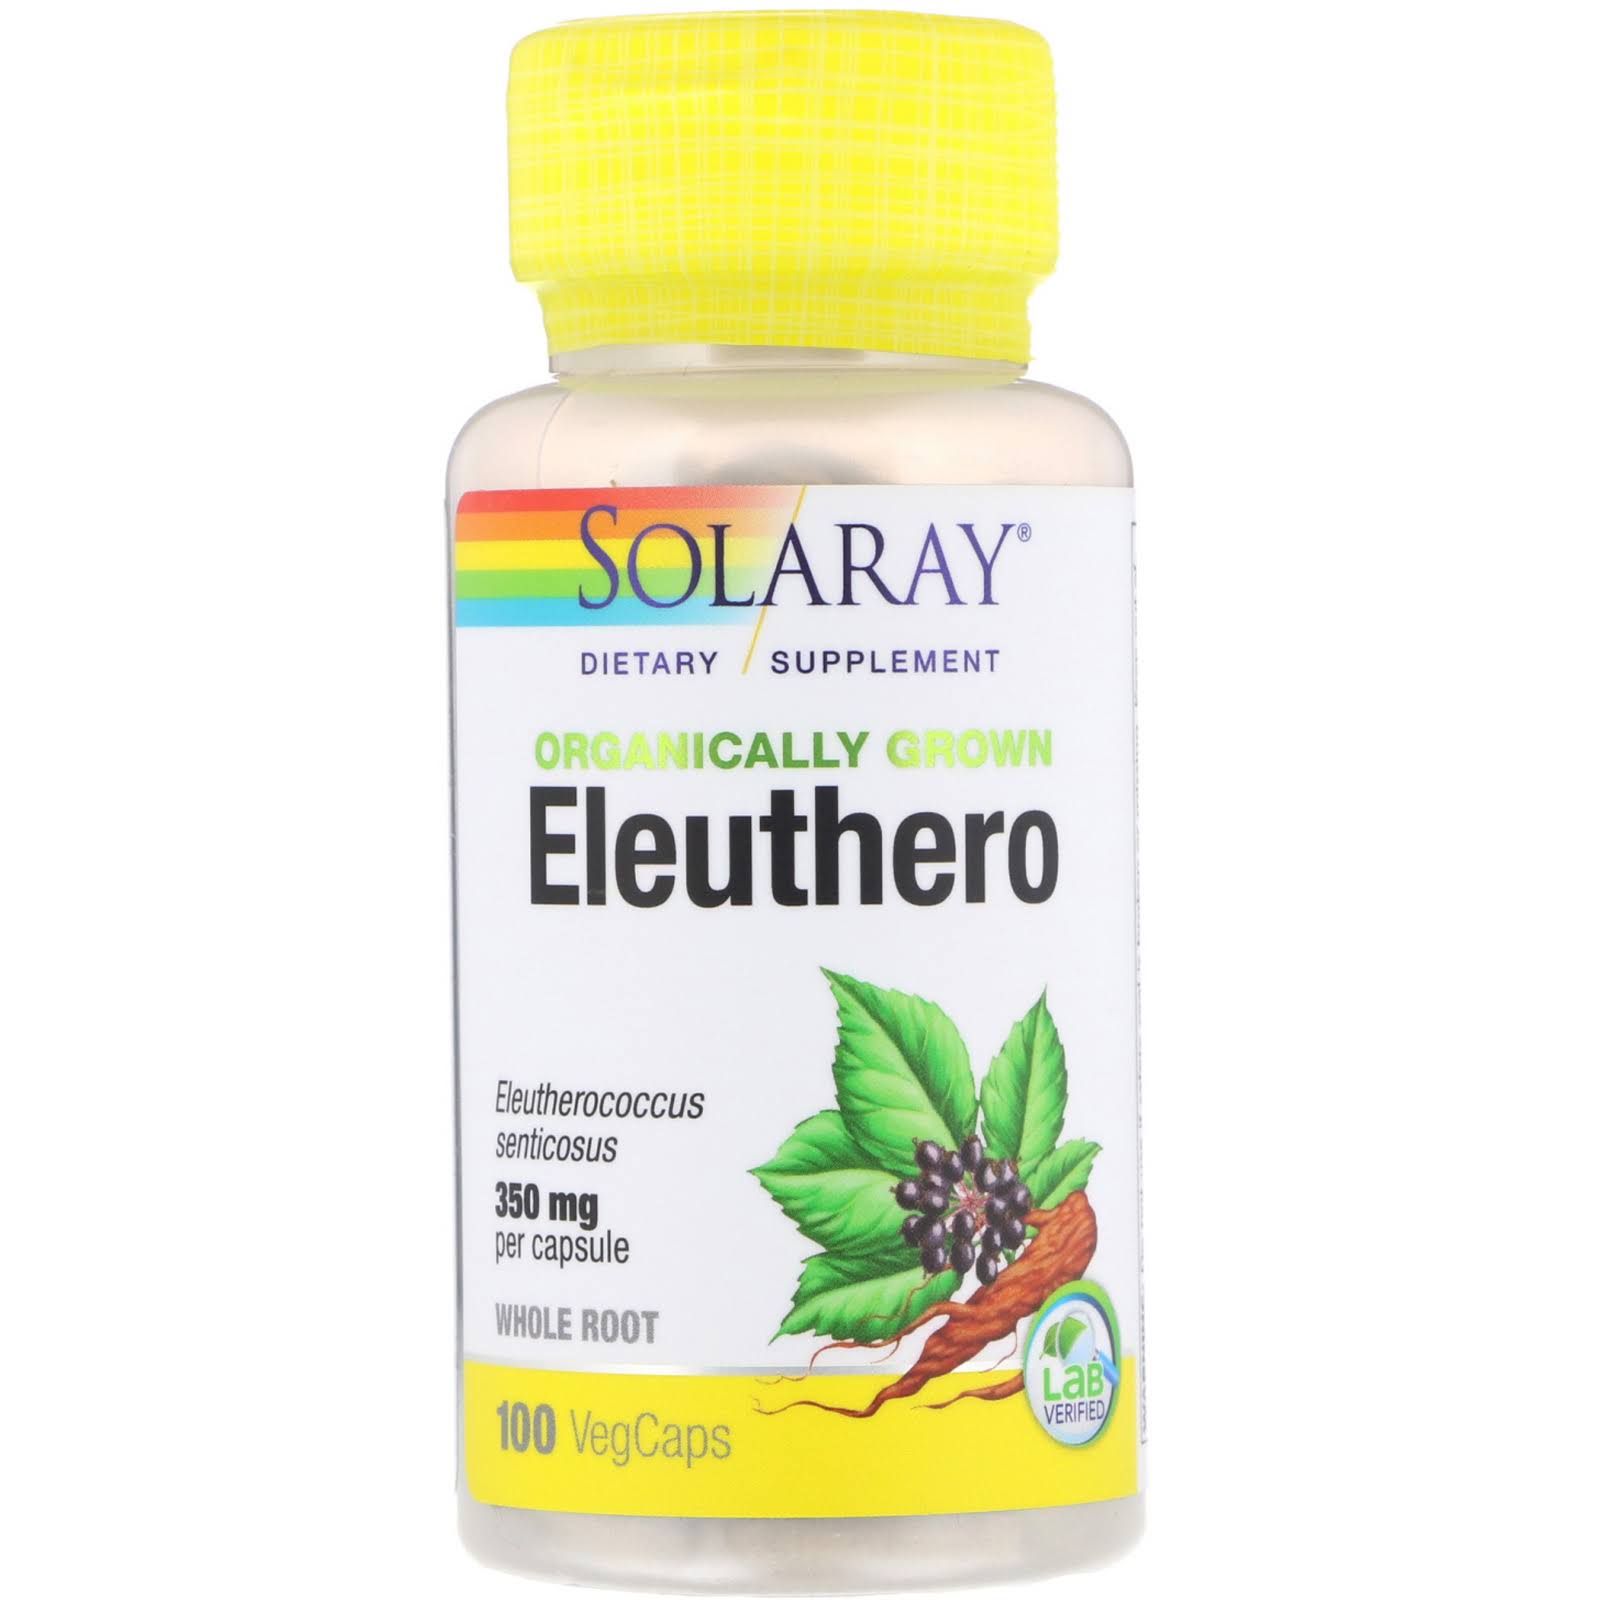 Solaray, Eleuthero 350 mg, 100 VegCaps